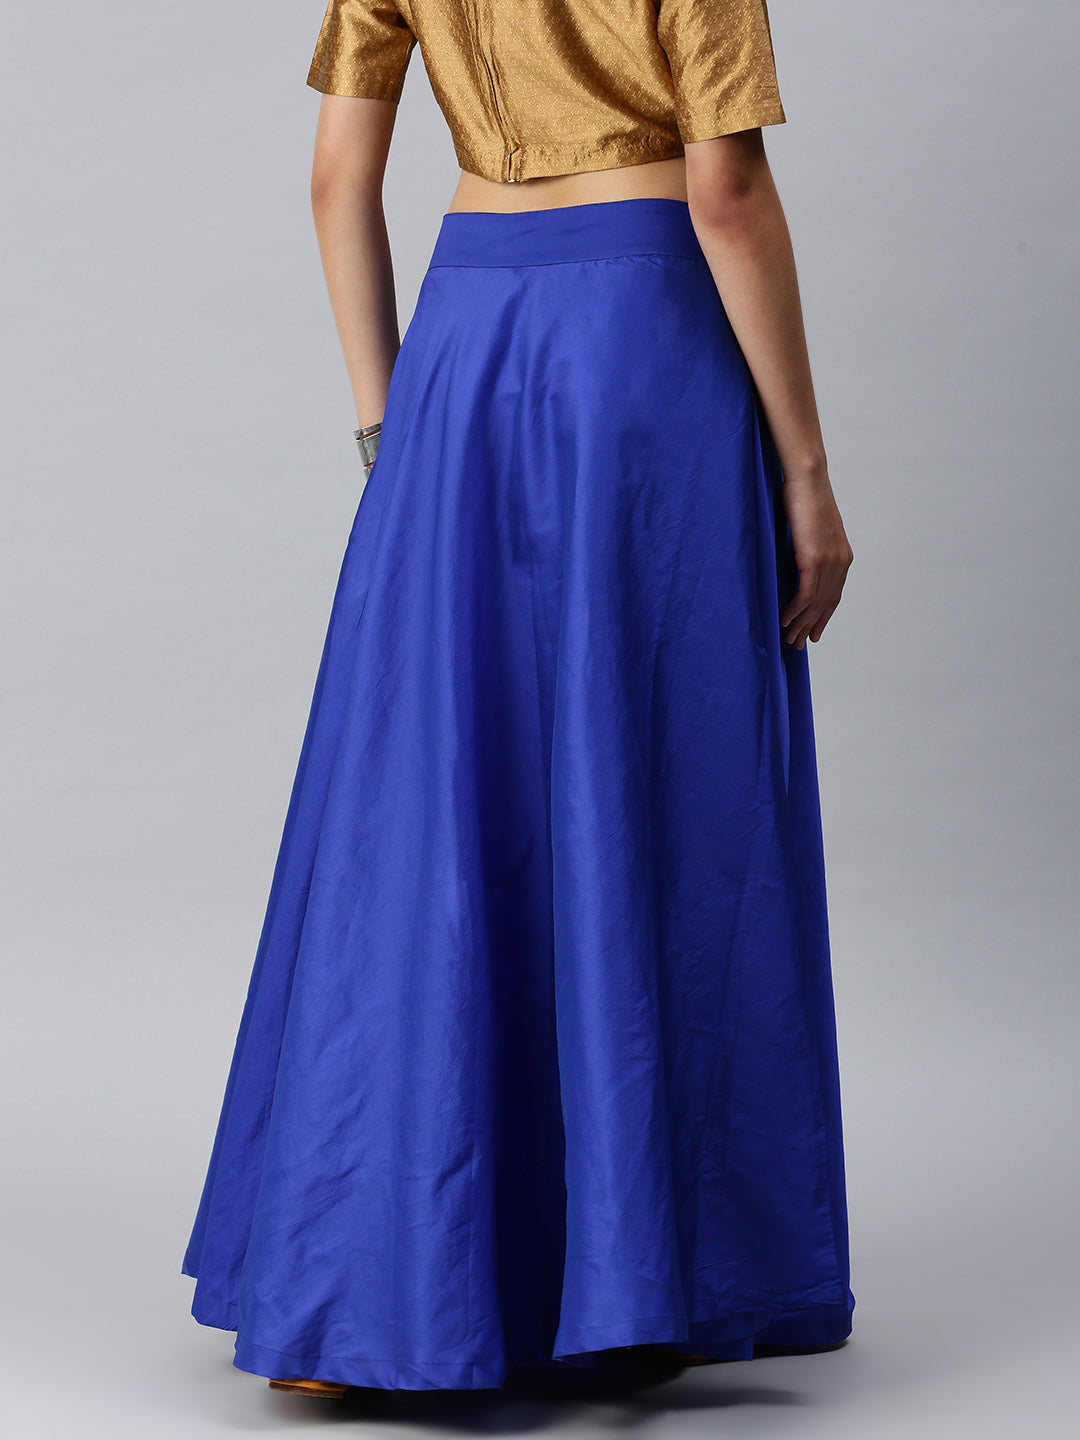 De Moza Women's Skirt Royal Blue